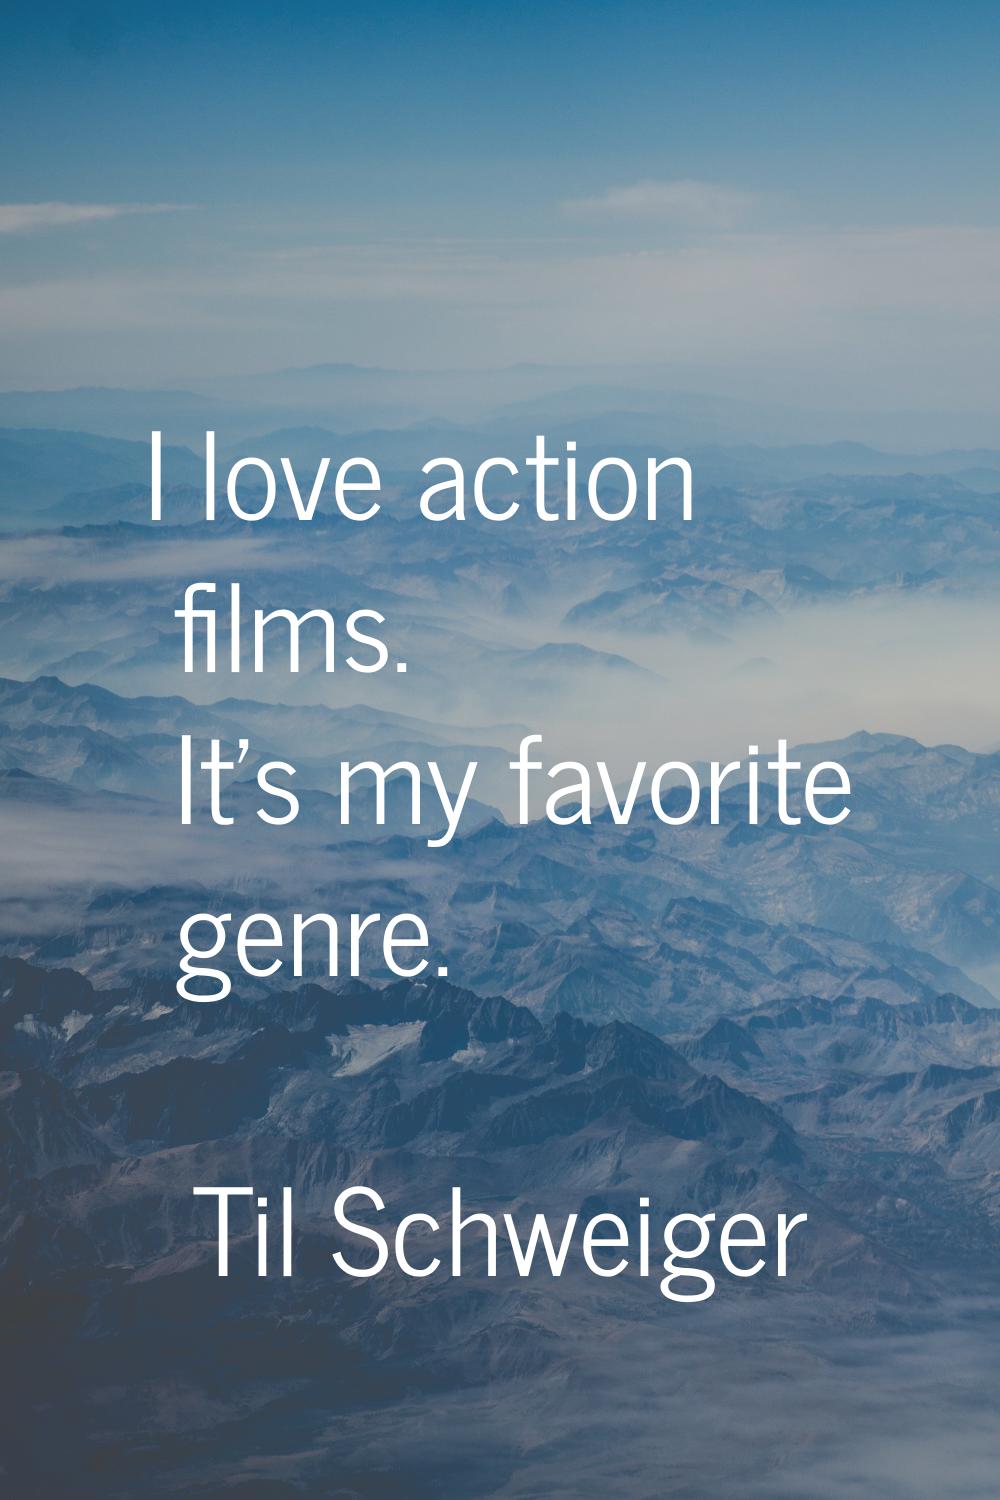 I love action films. It's my favorite genre.